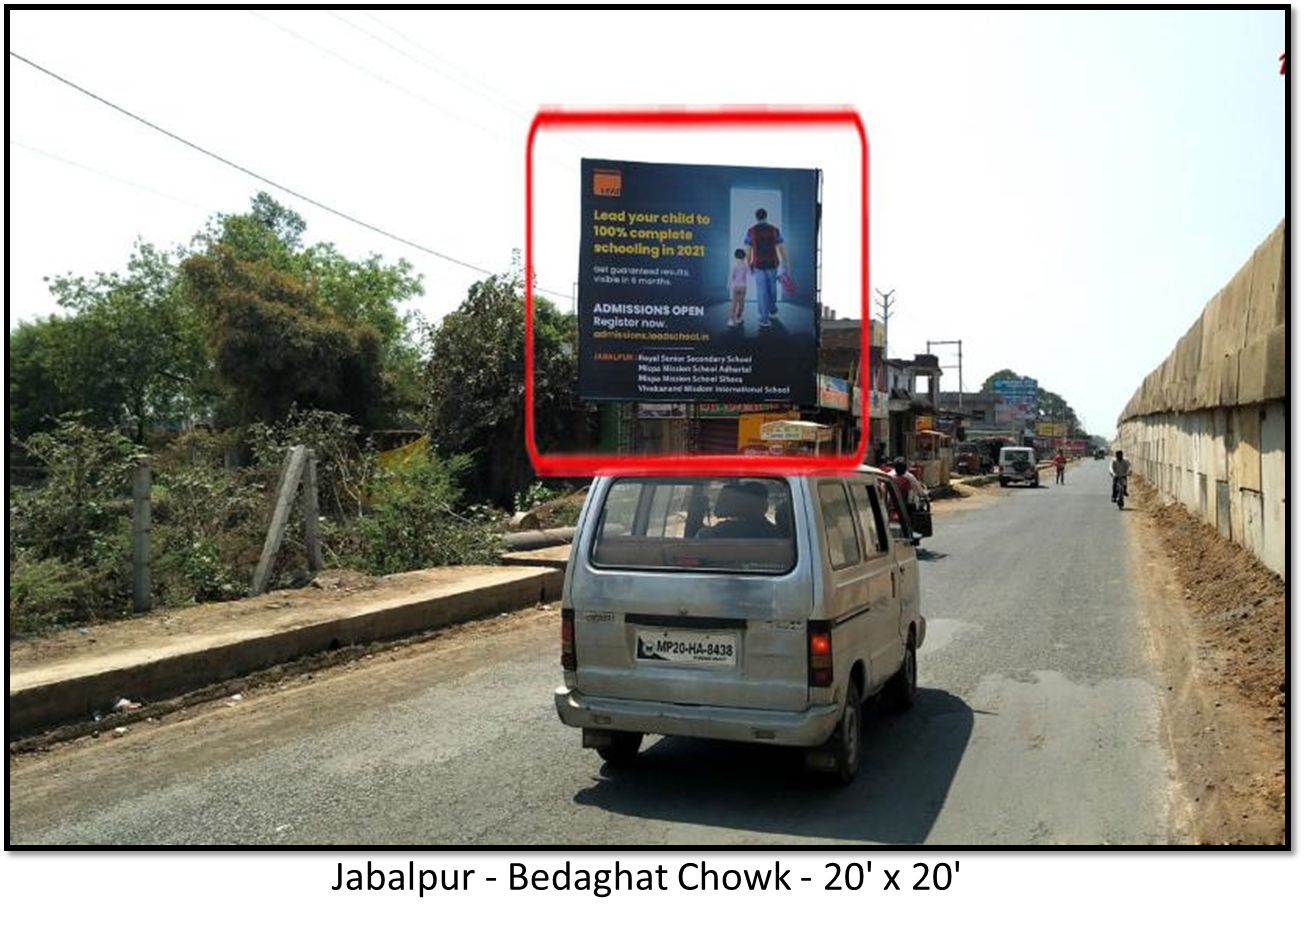 Billboard - Bedaghat Chowk, Jabalpur, Madhya Pradesh